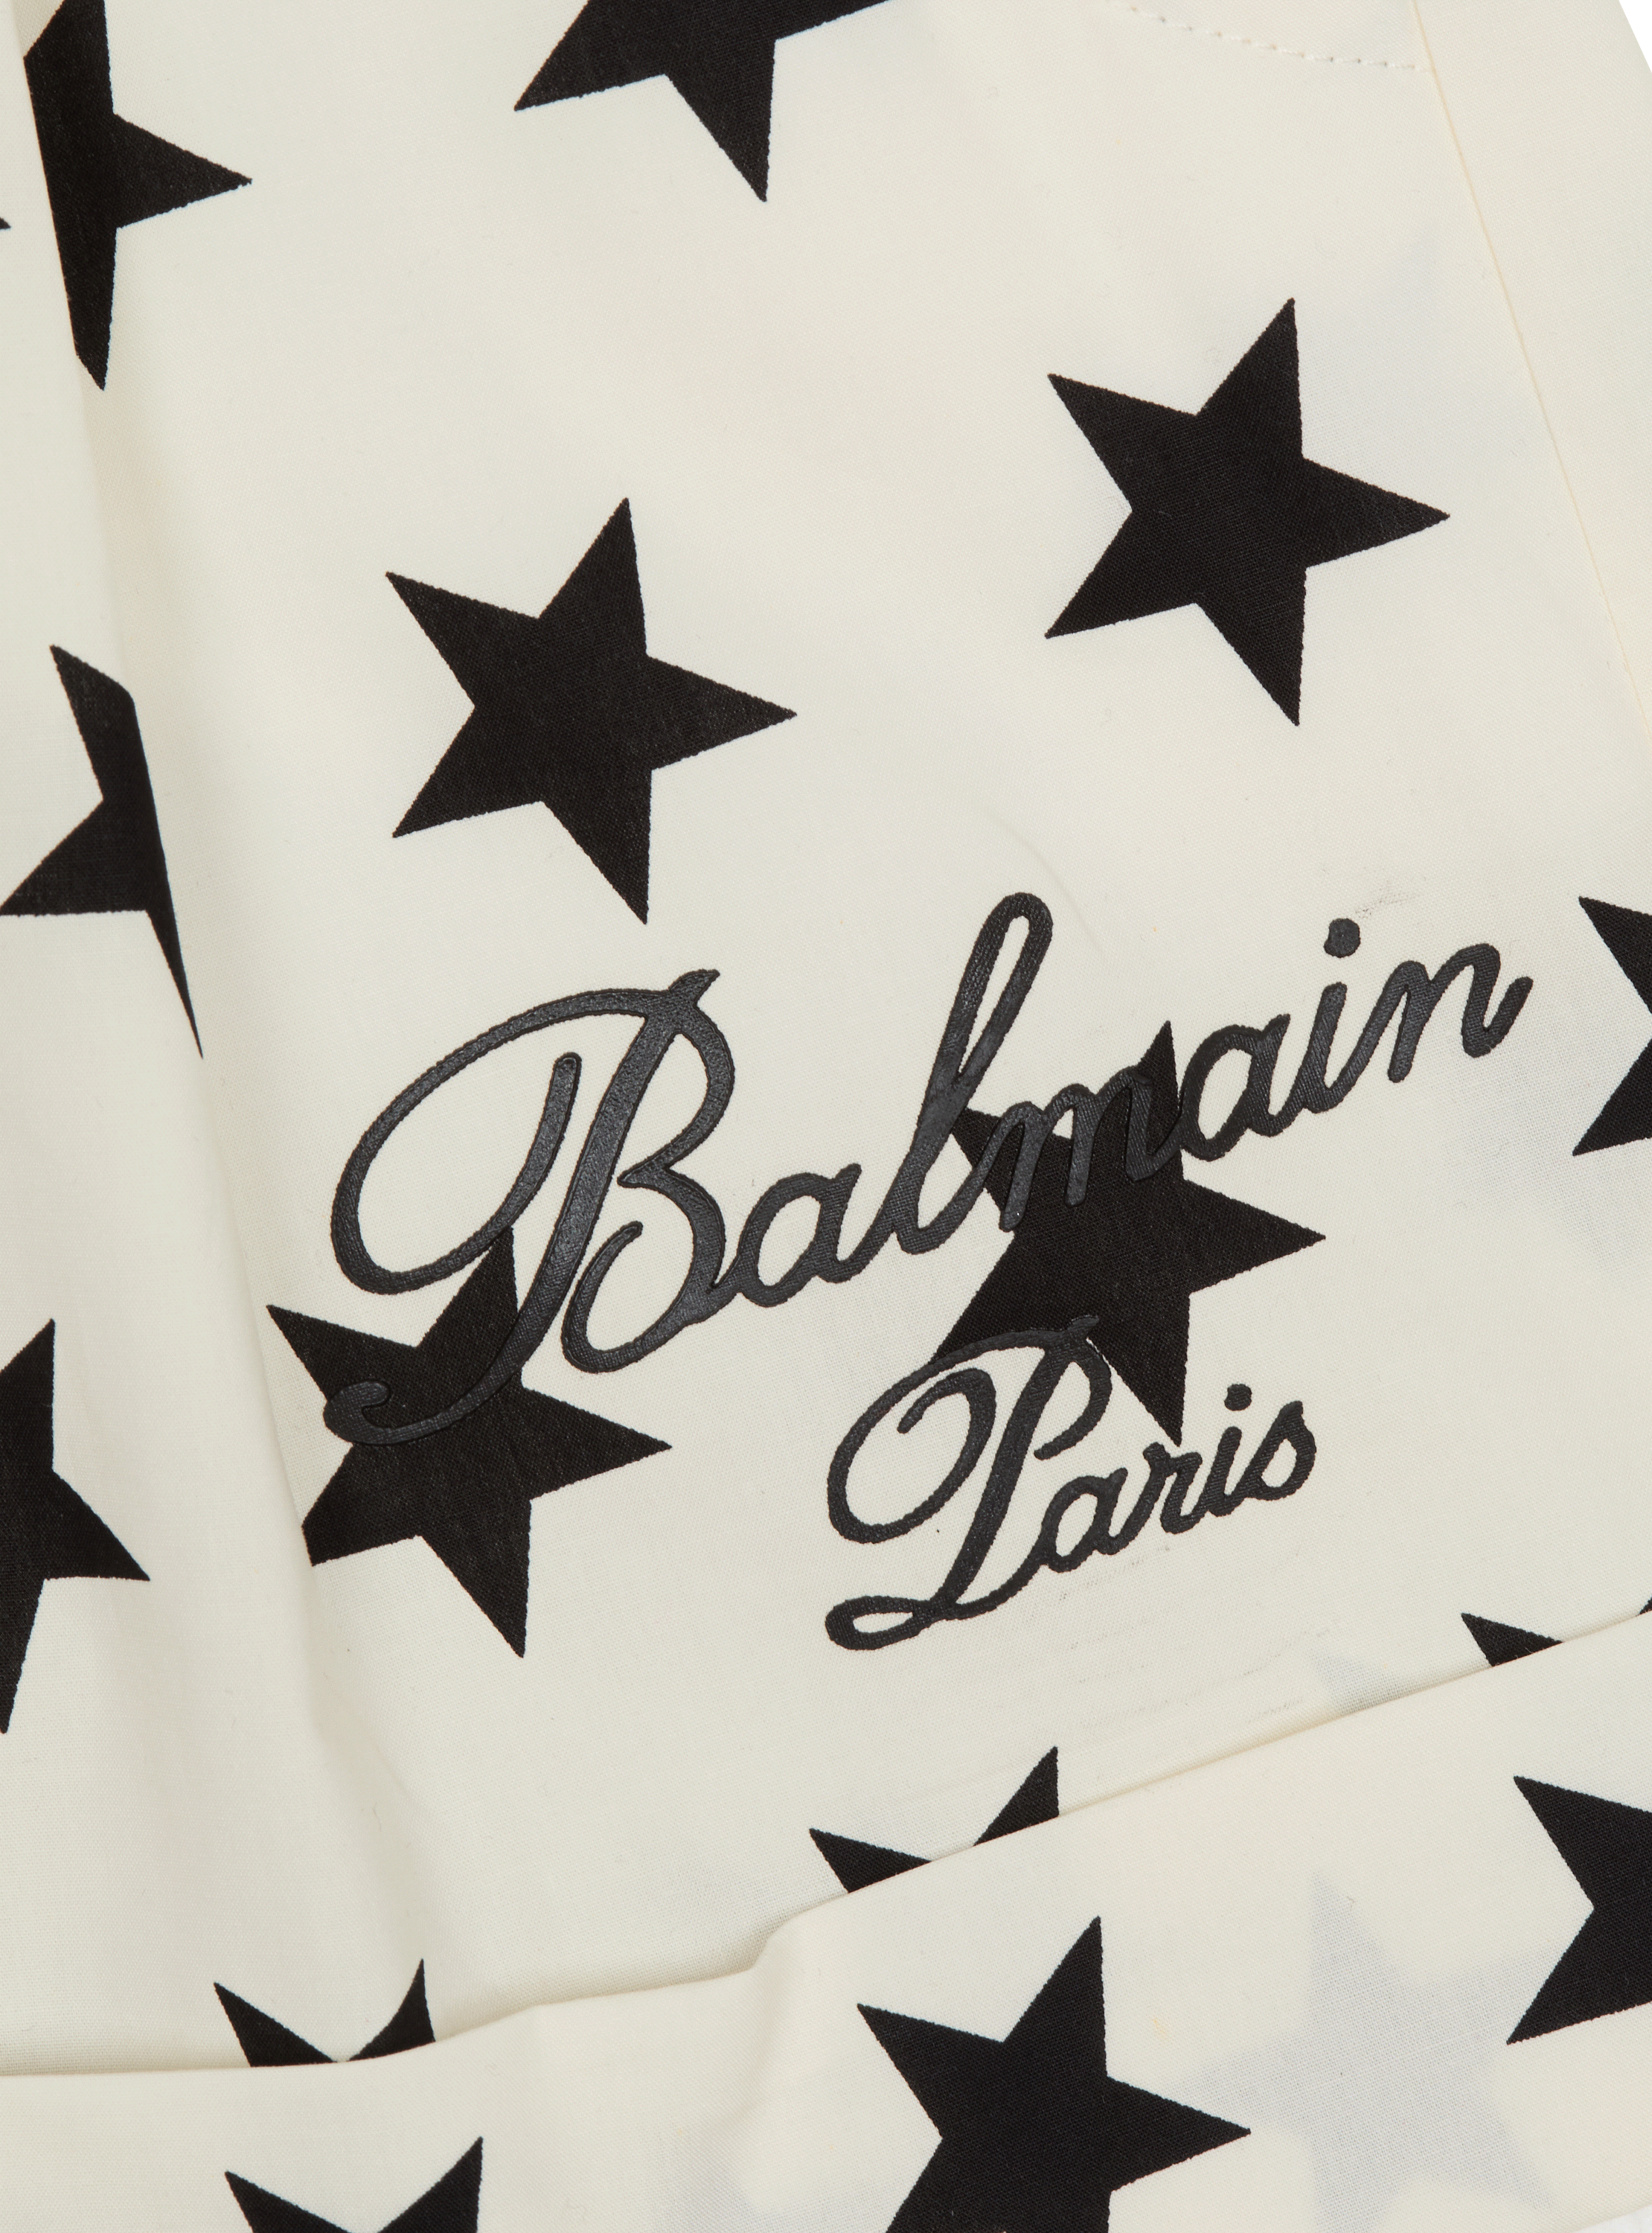 Pantalones cortos Balmain Signature estrellas